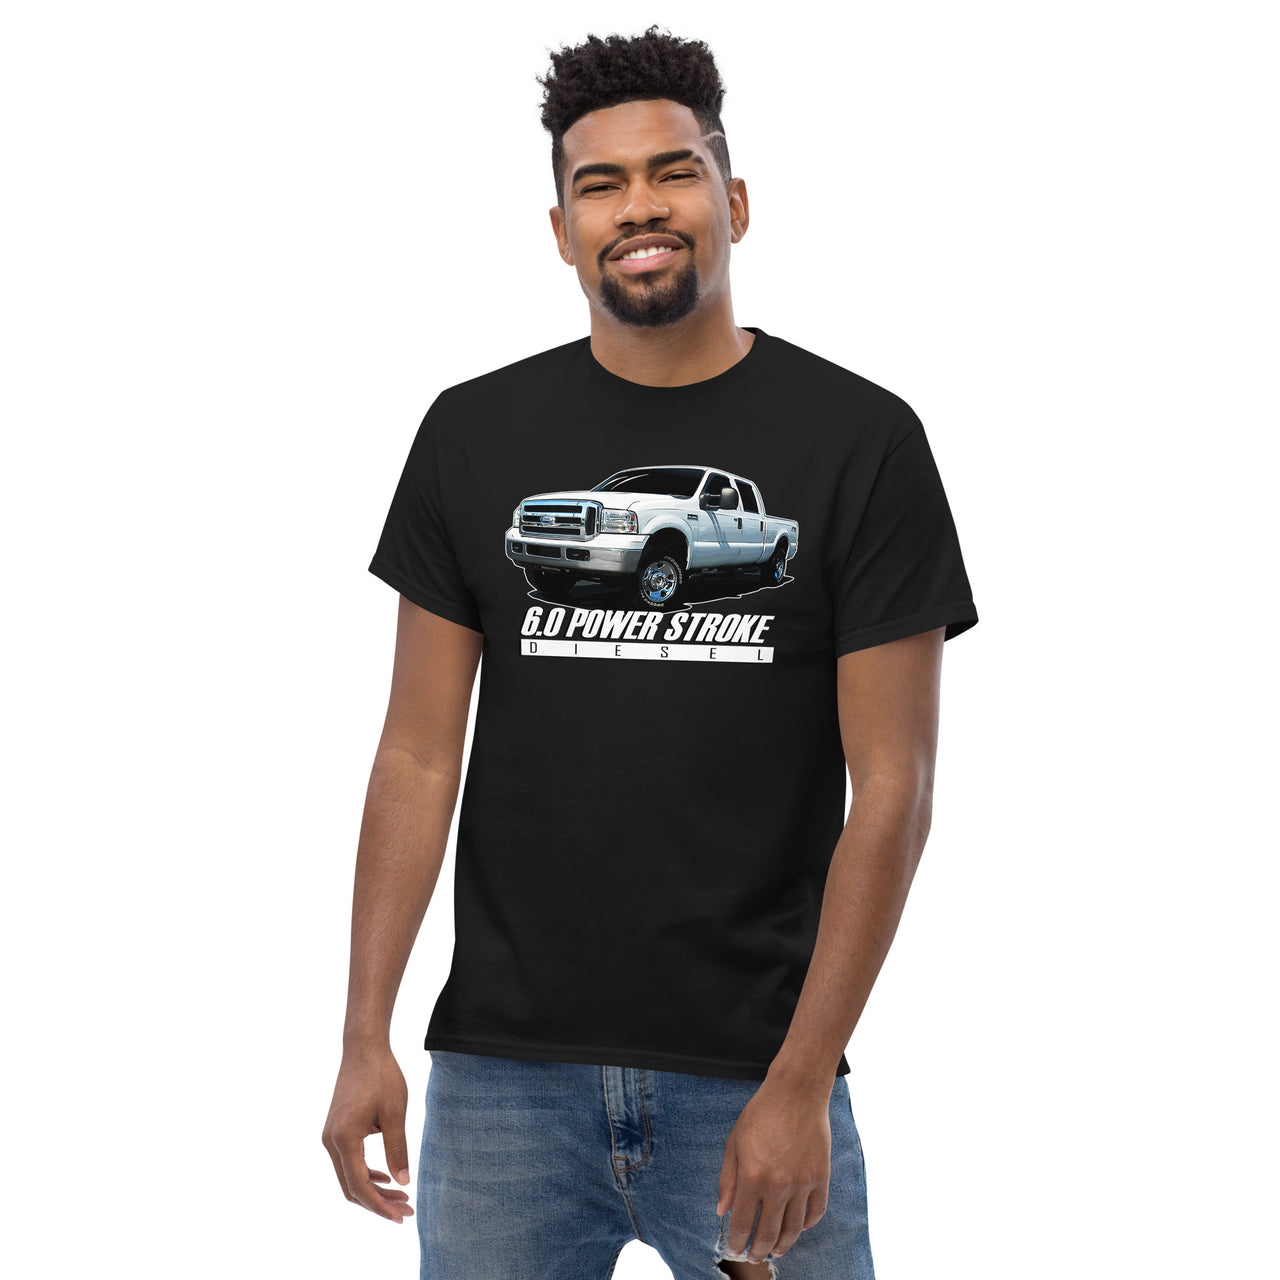 6.0 Power Stroke Diesel T-Shirt modeled in black